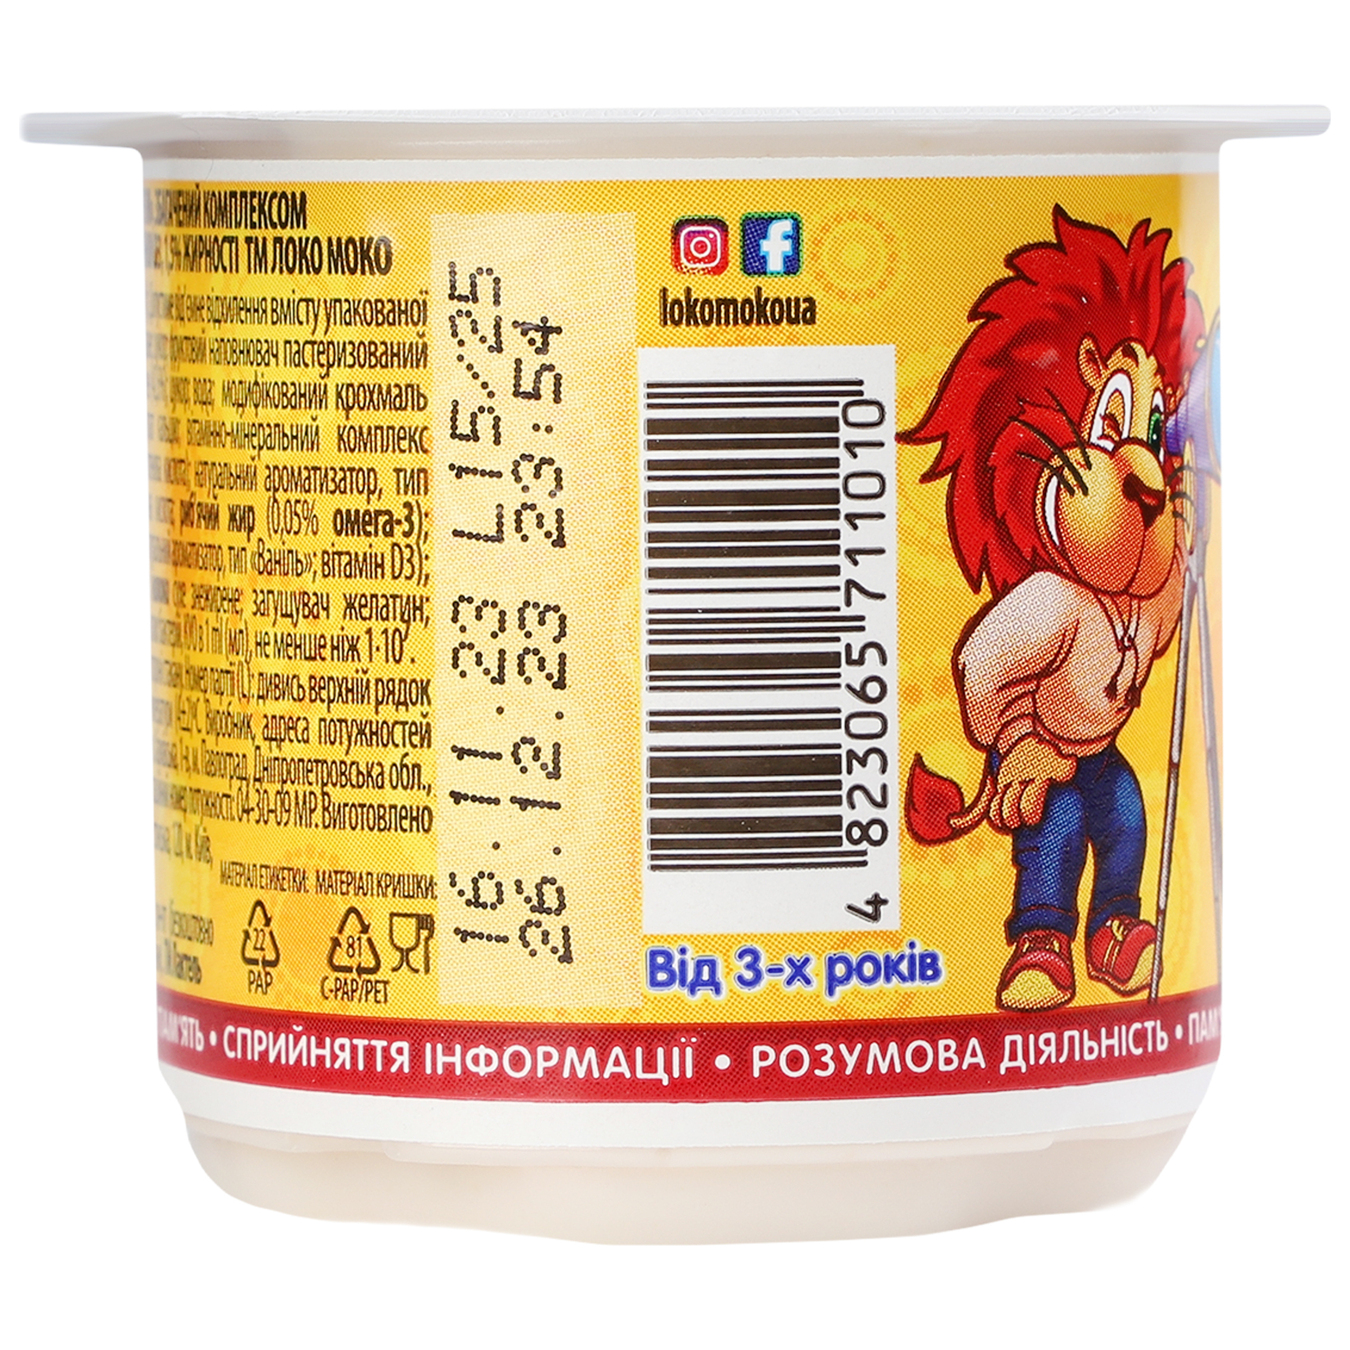 Lactel Loko Moko Peach Flavored Yogurt 1,5% 115g 2